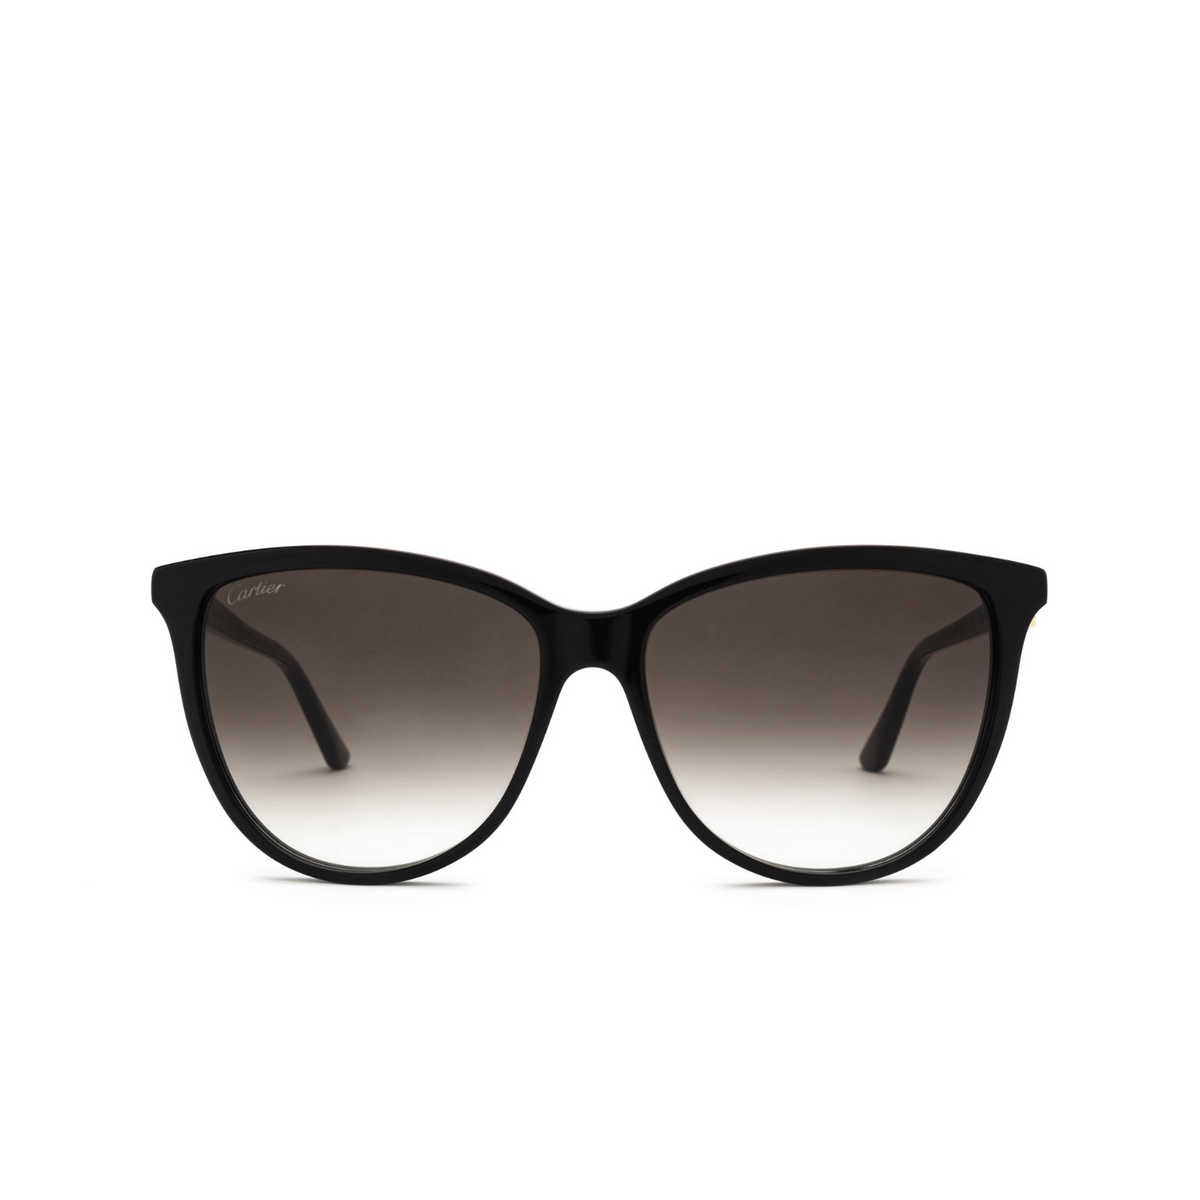 Cartier® Cat-eye Sunglasses: CT0186S color Black 001 - front view.